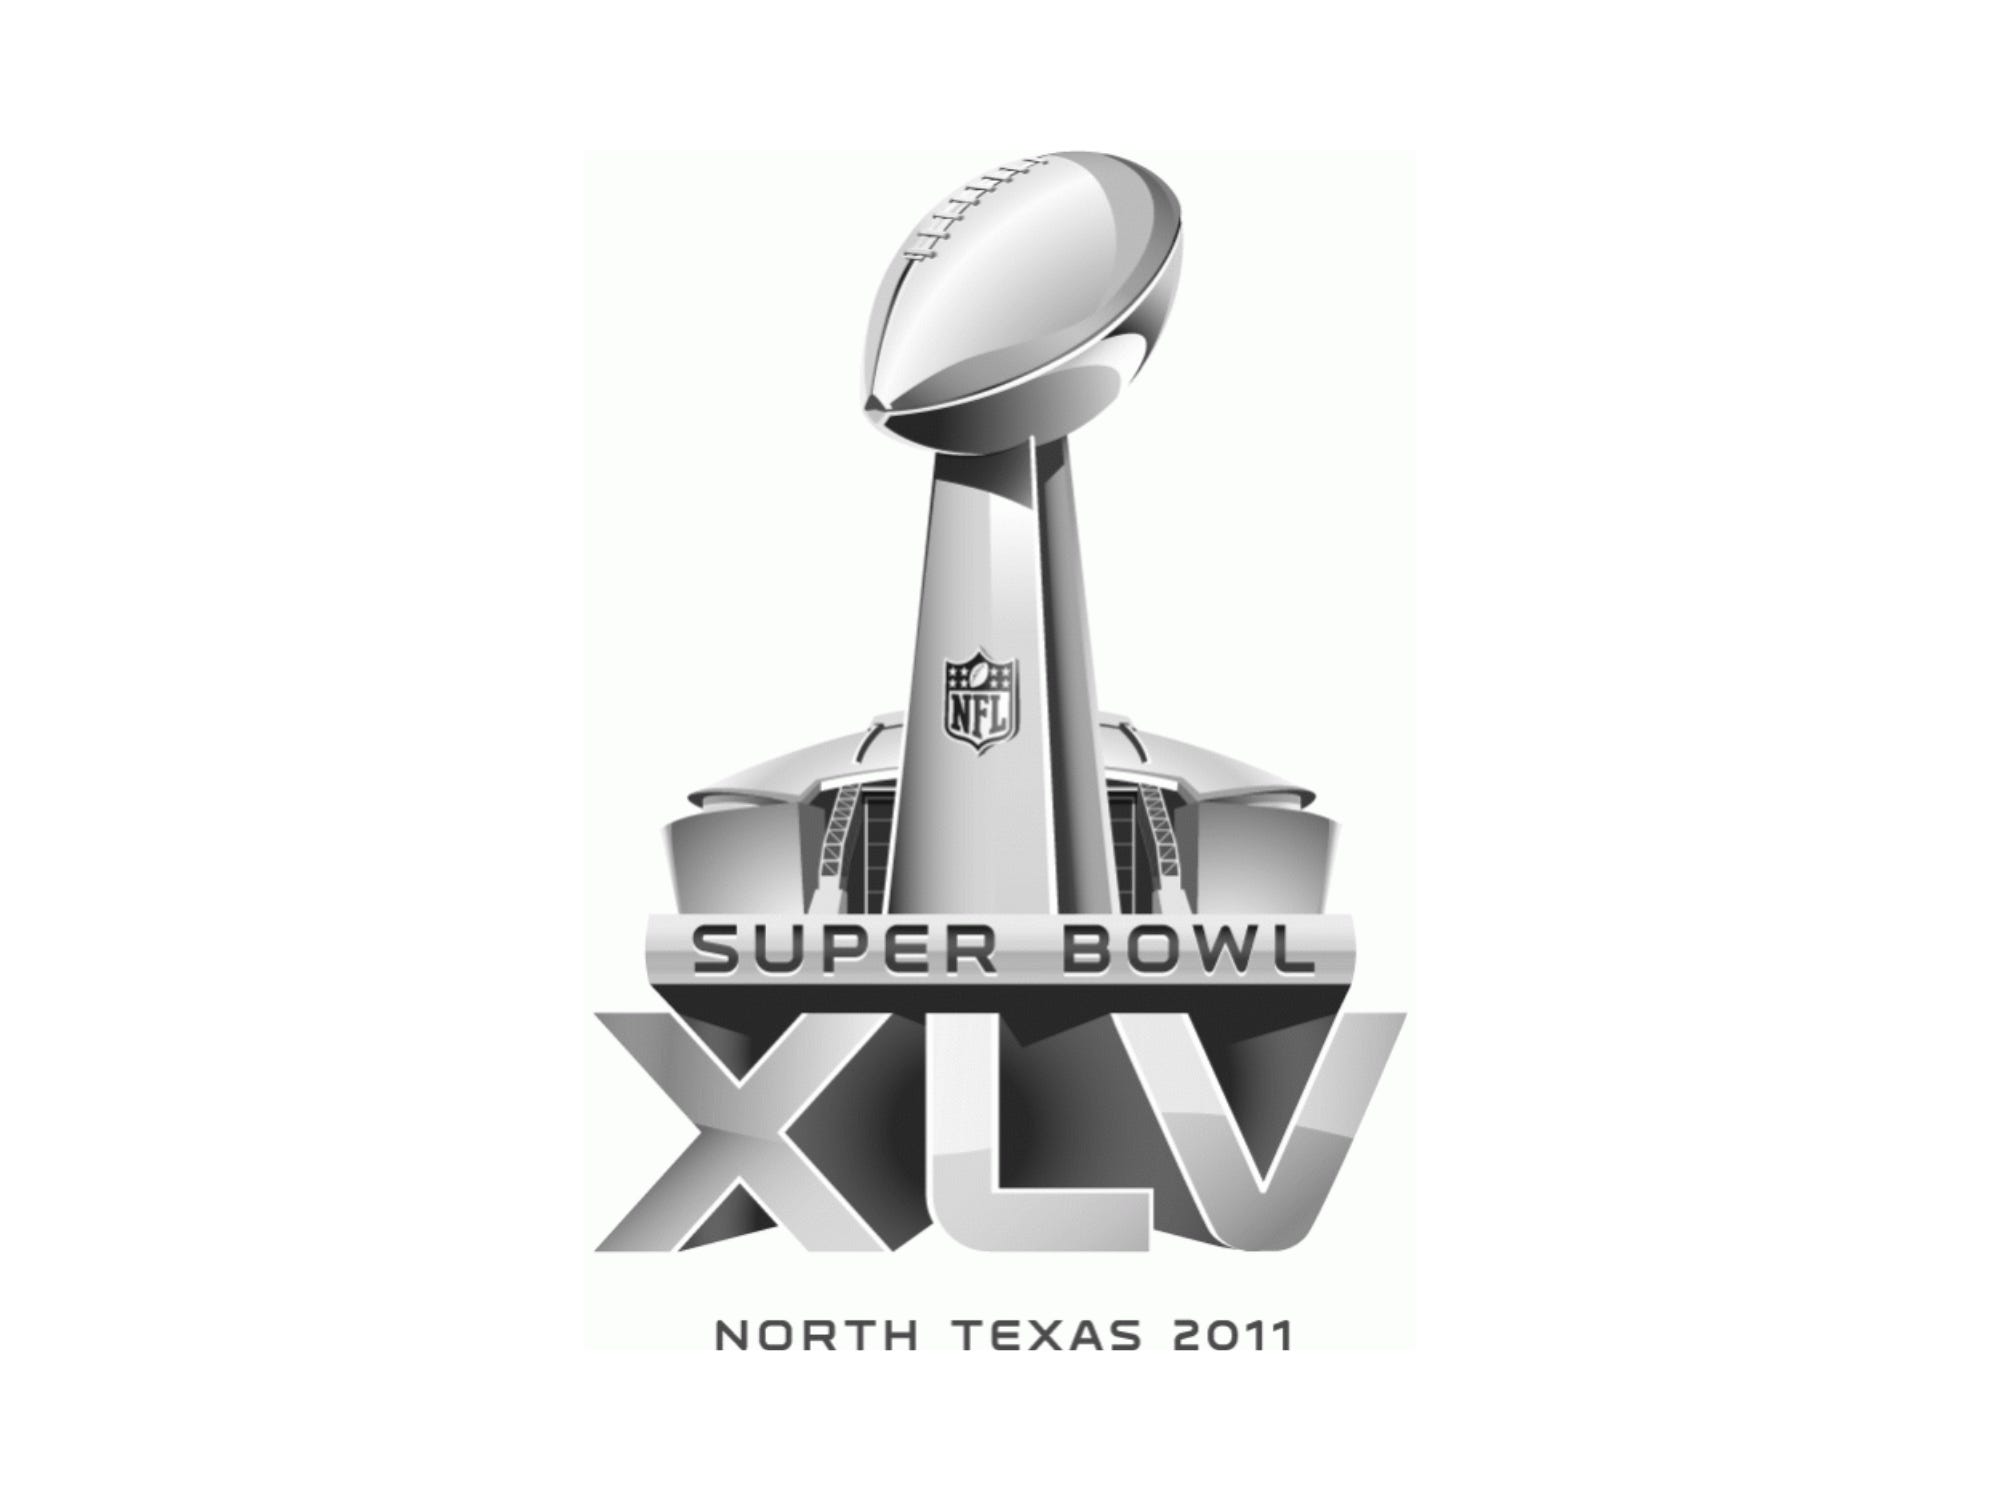 Super Bowl xlv